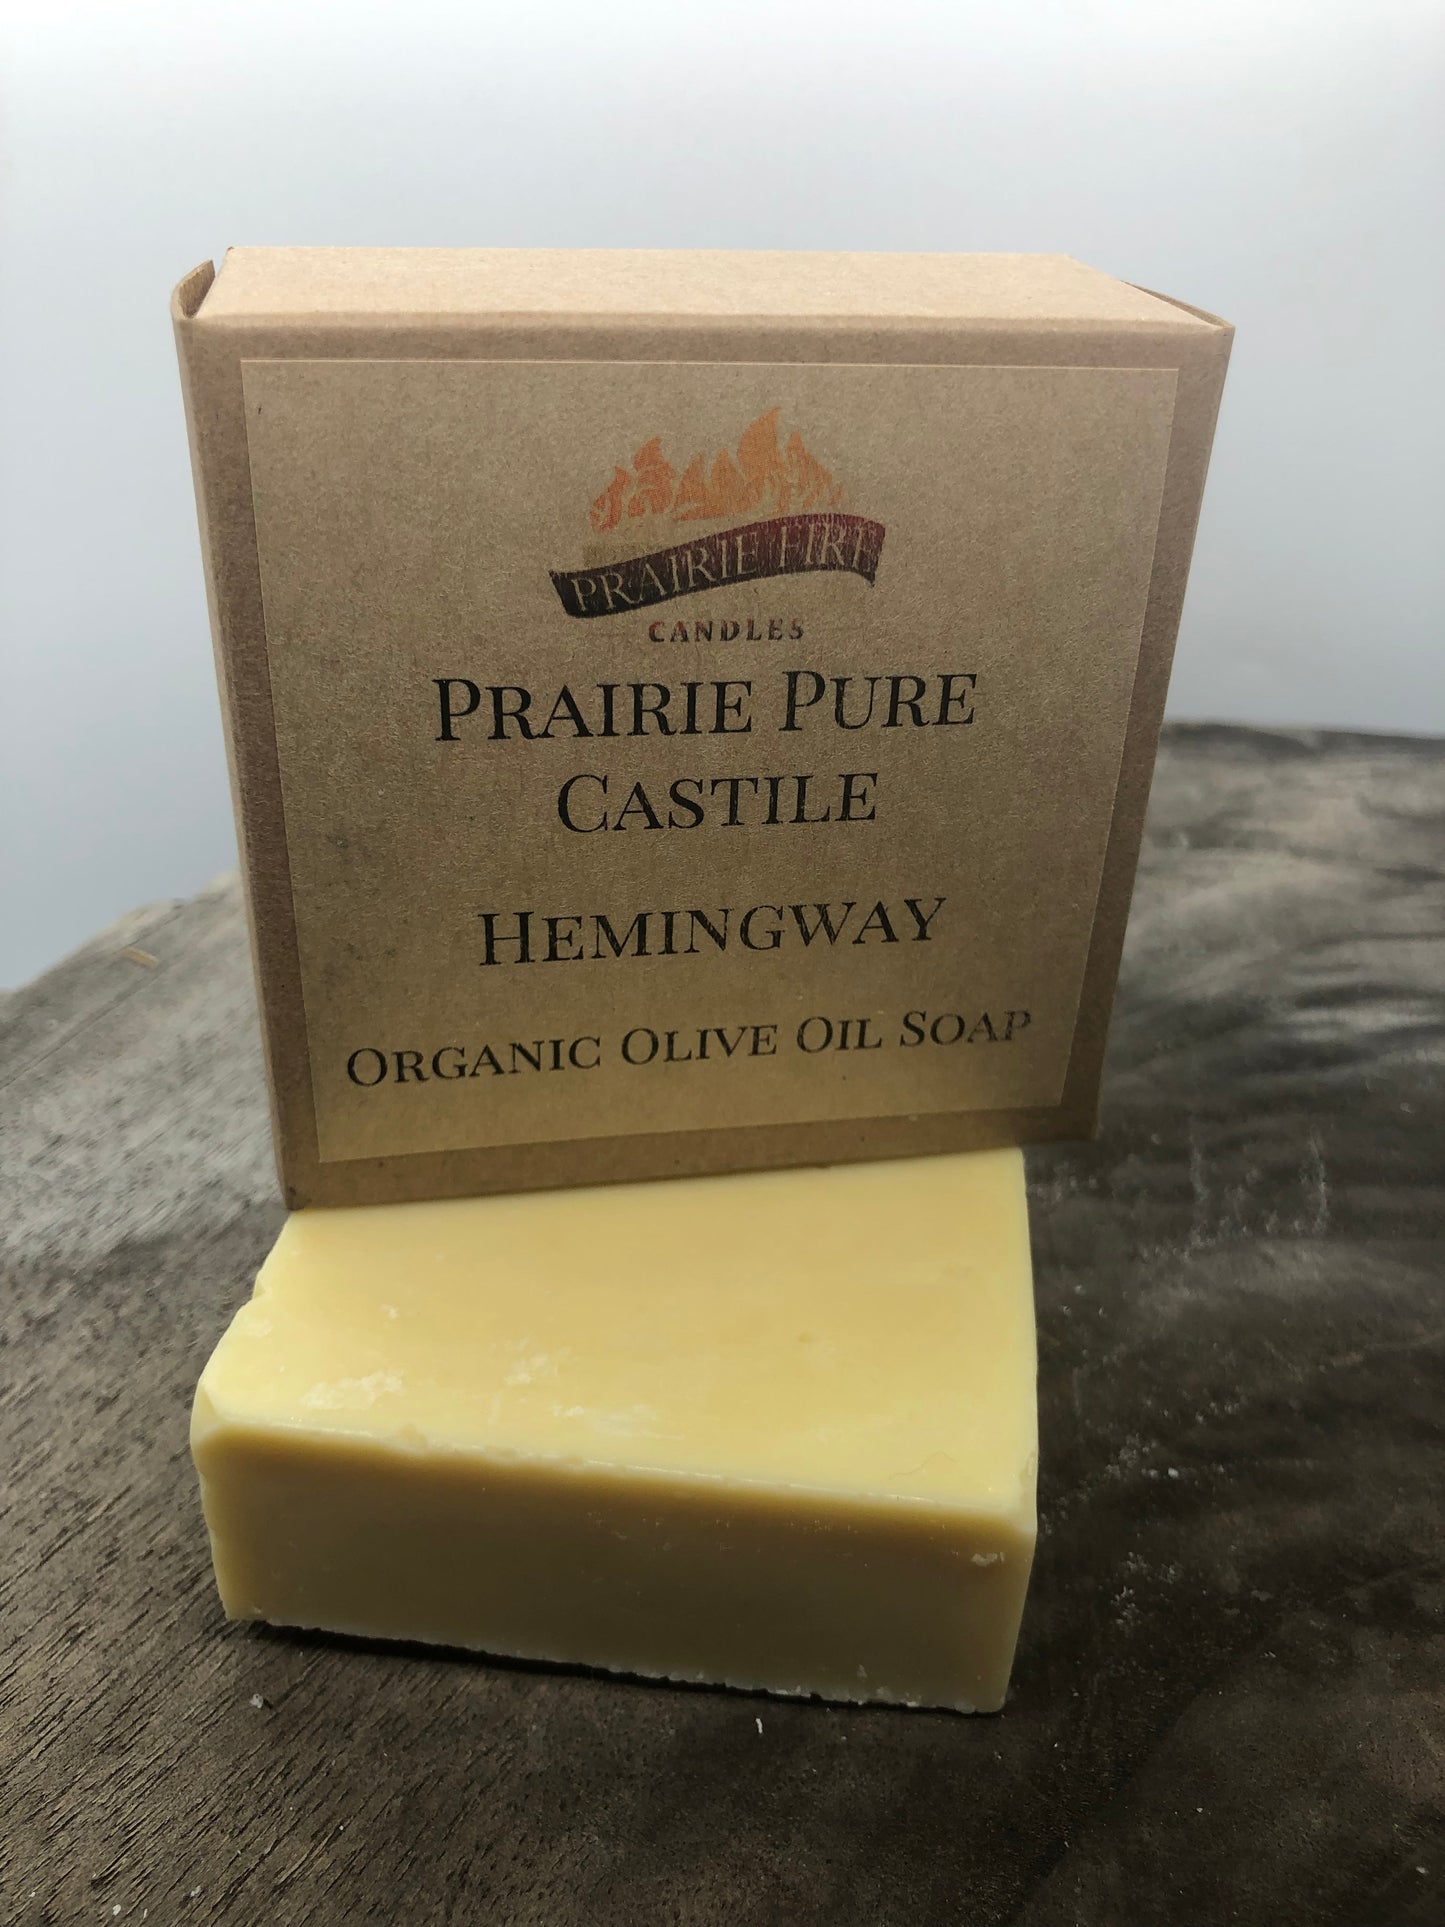 Hemingway Real Castile Organic Olive Oil Soap for Sensitive Skin - Dye Free - 100% Certified Organic Extra Virgin Olive Oil